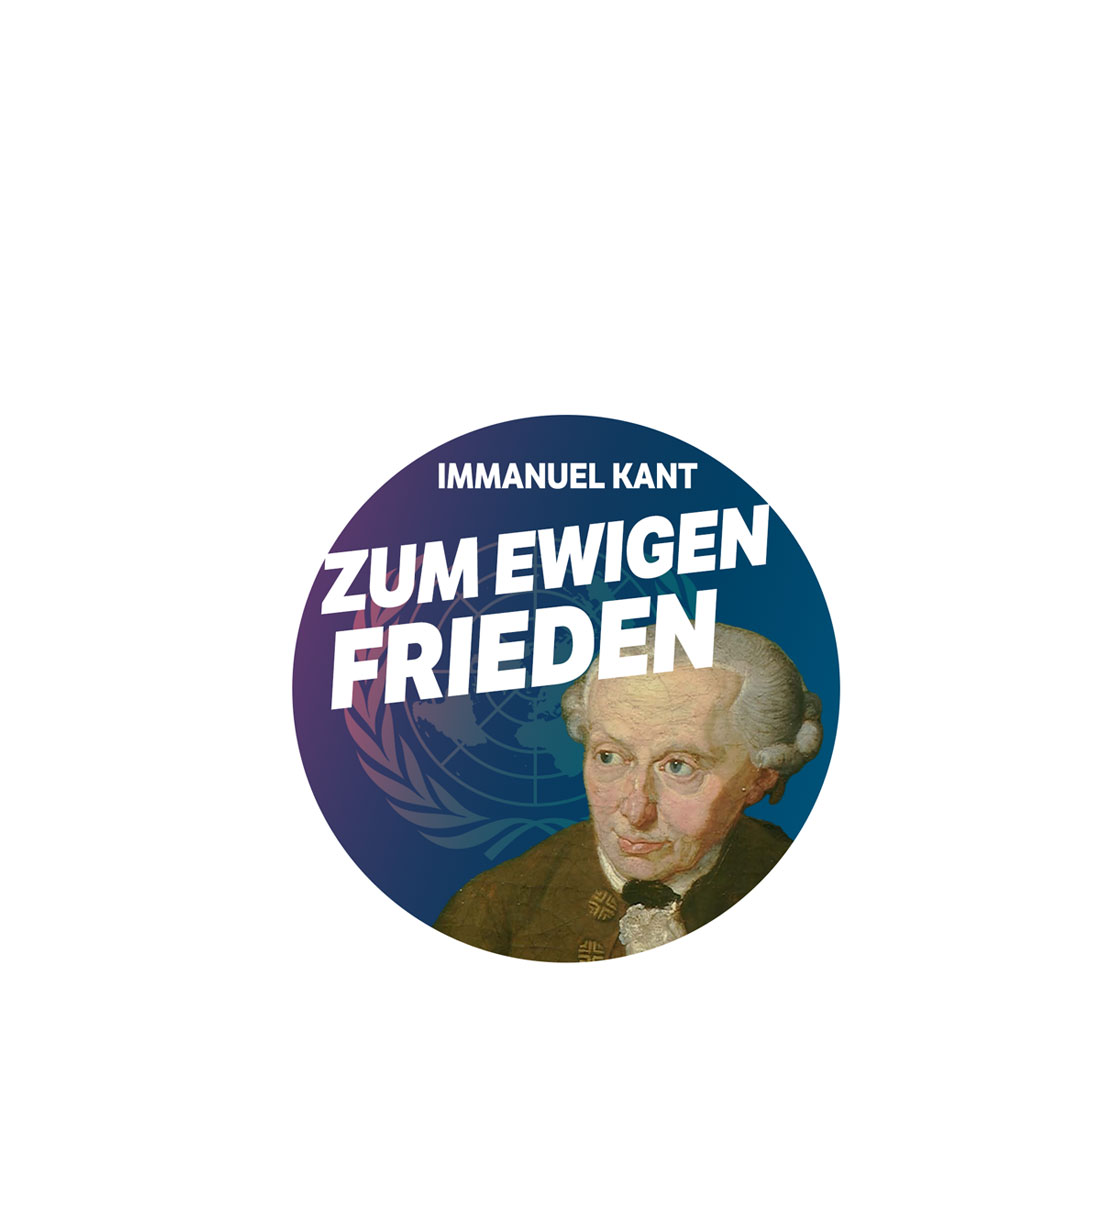 Soziopod #062: Immanuel Kant - Zum ewigen Frieden